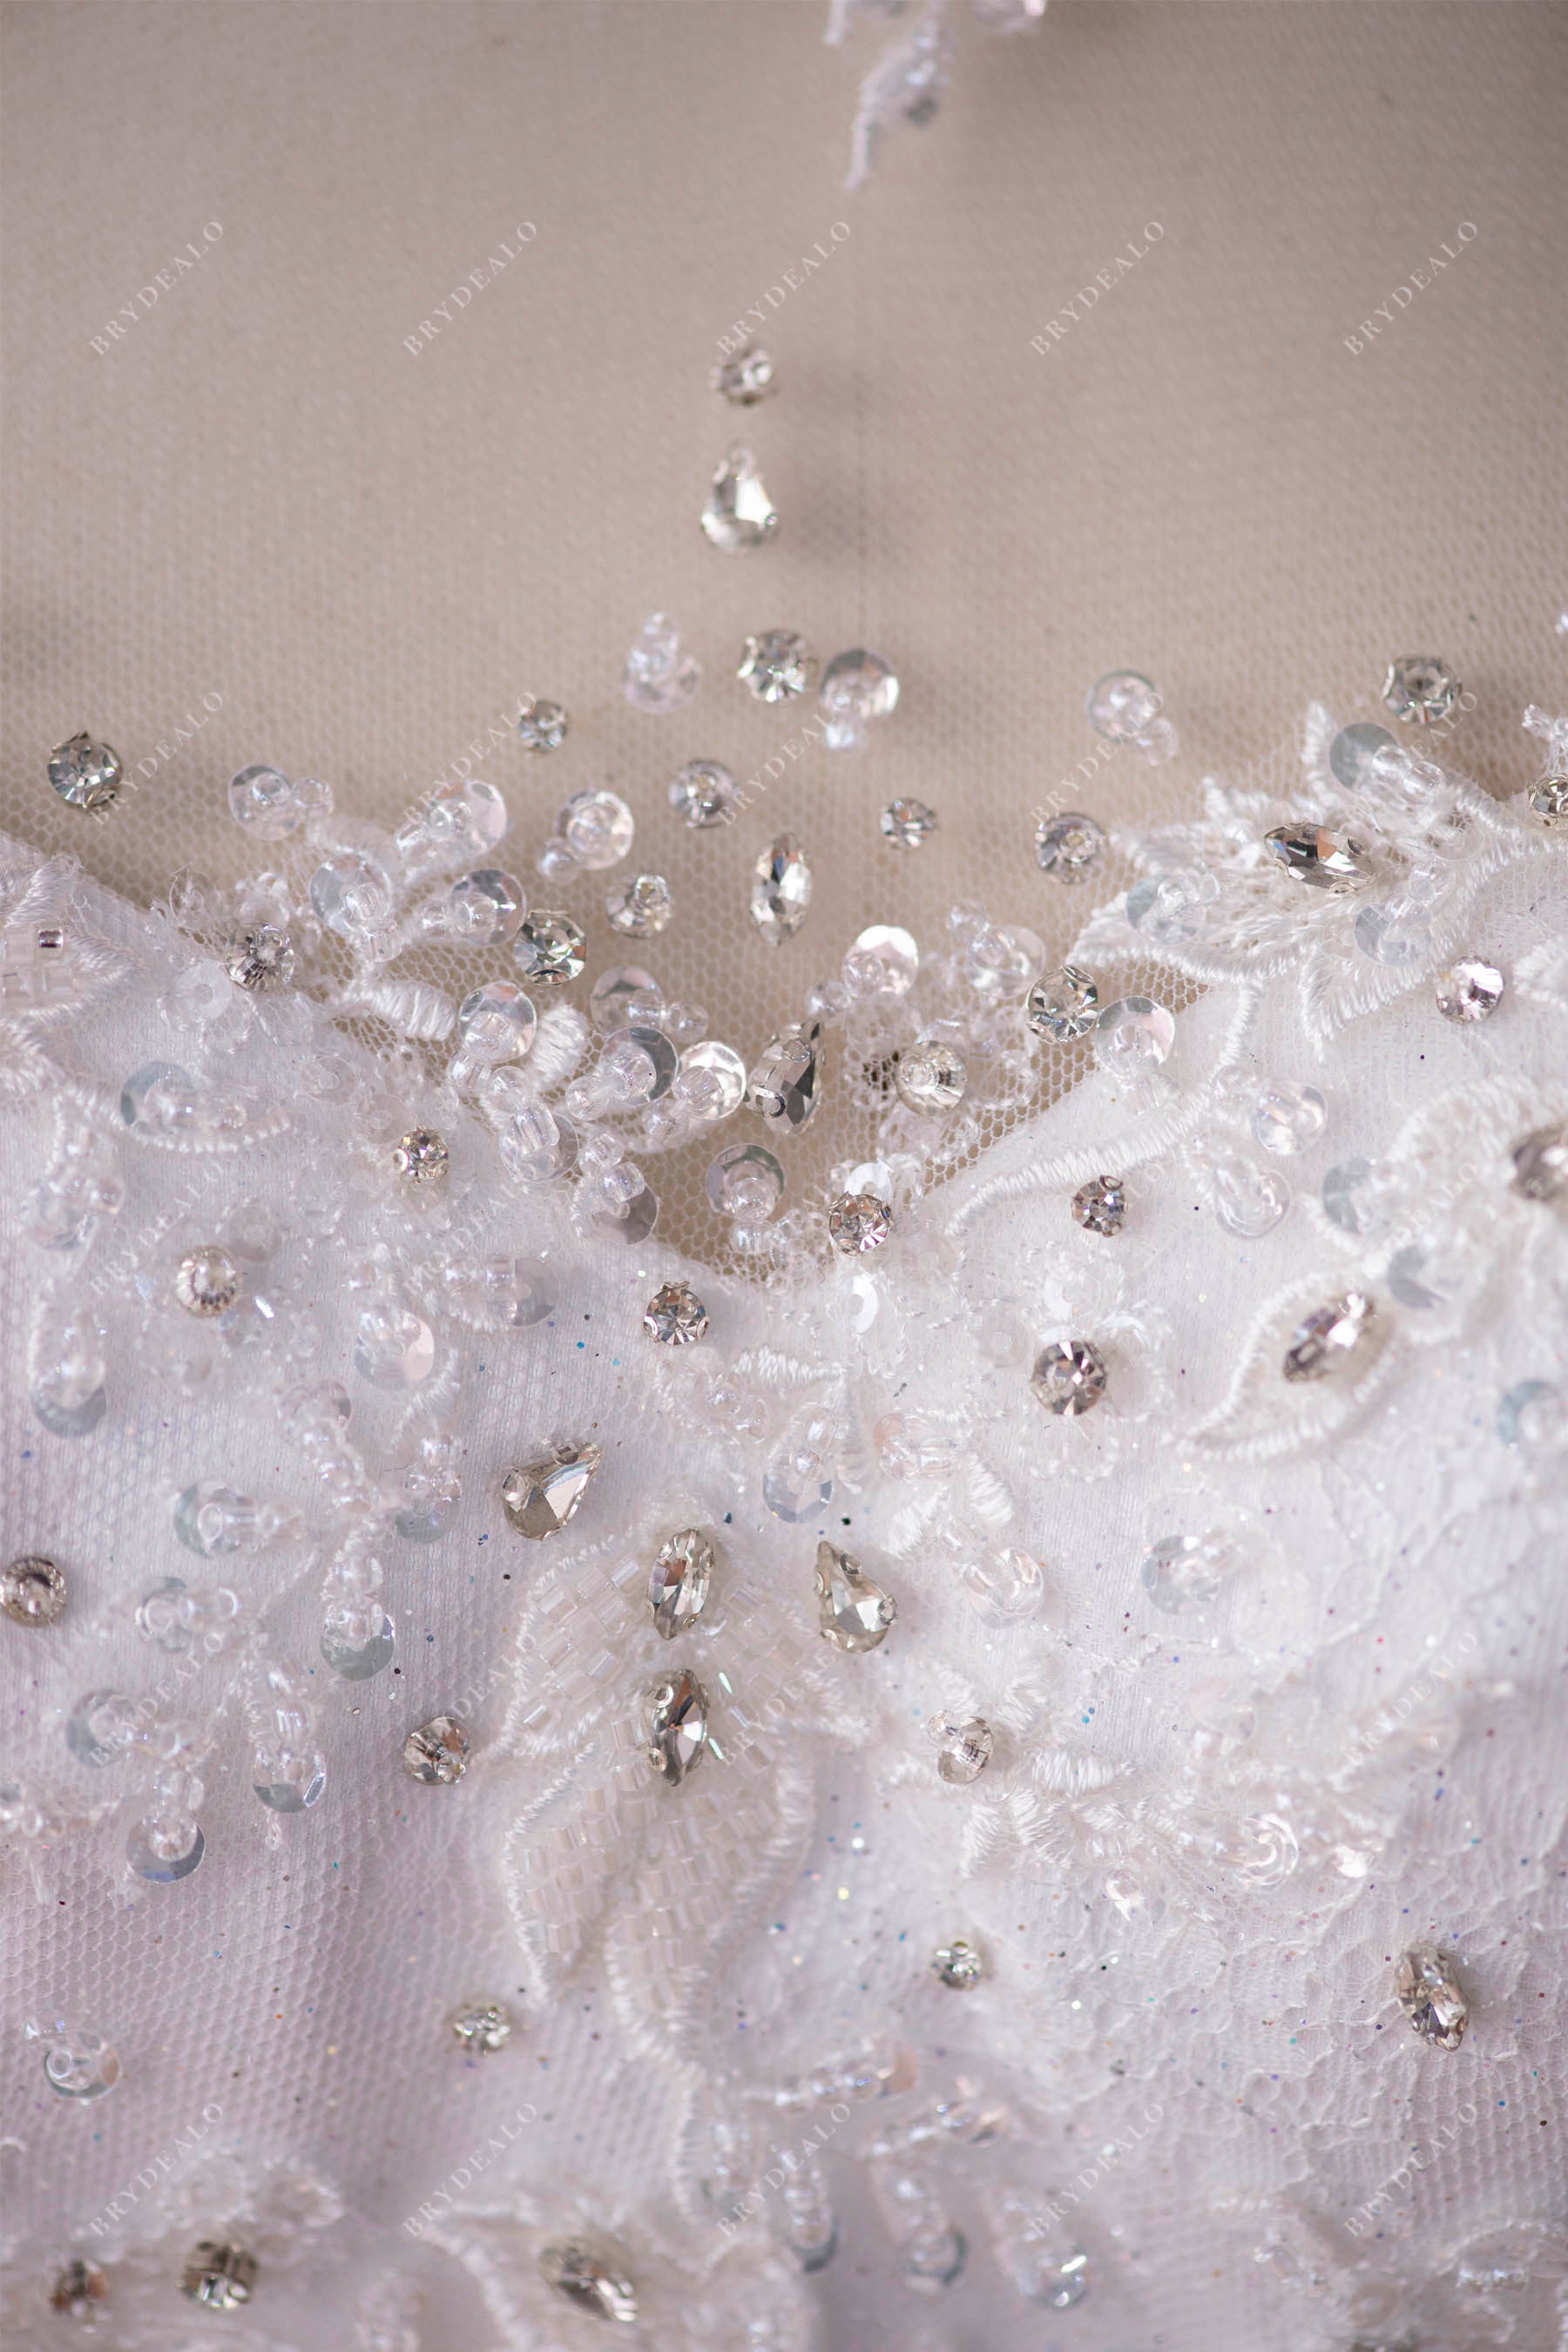 Sparkly Illusion Sleeved Ballgown Wedding Dress